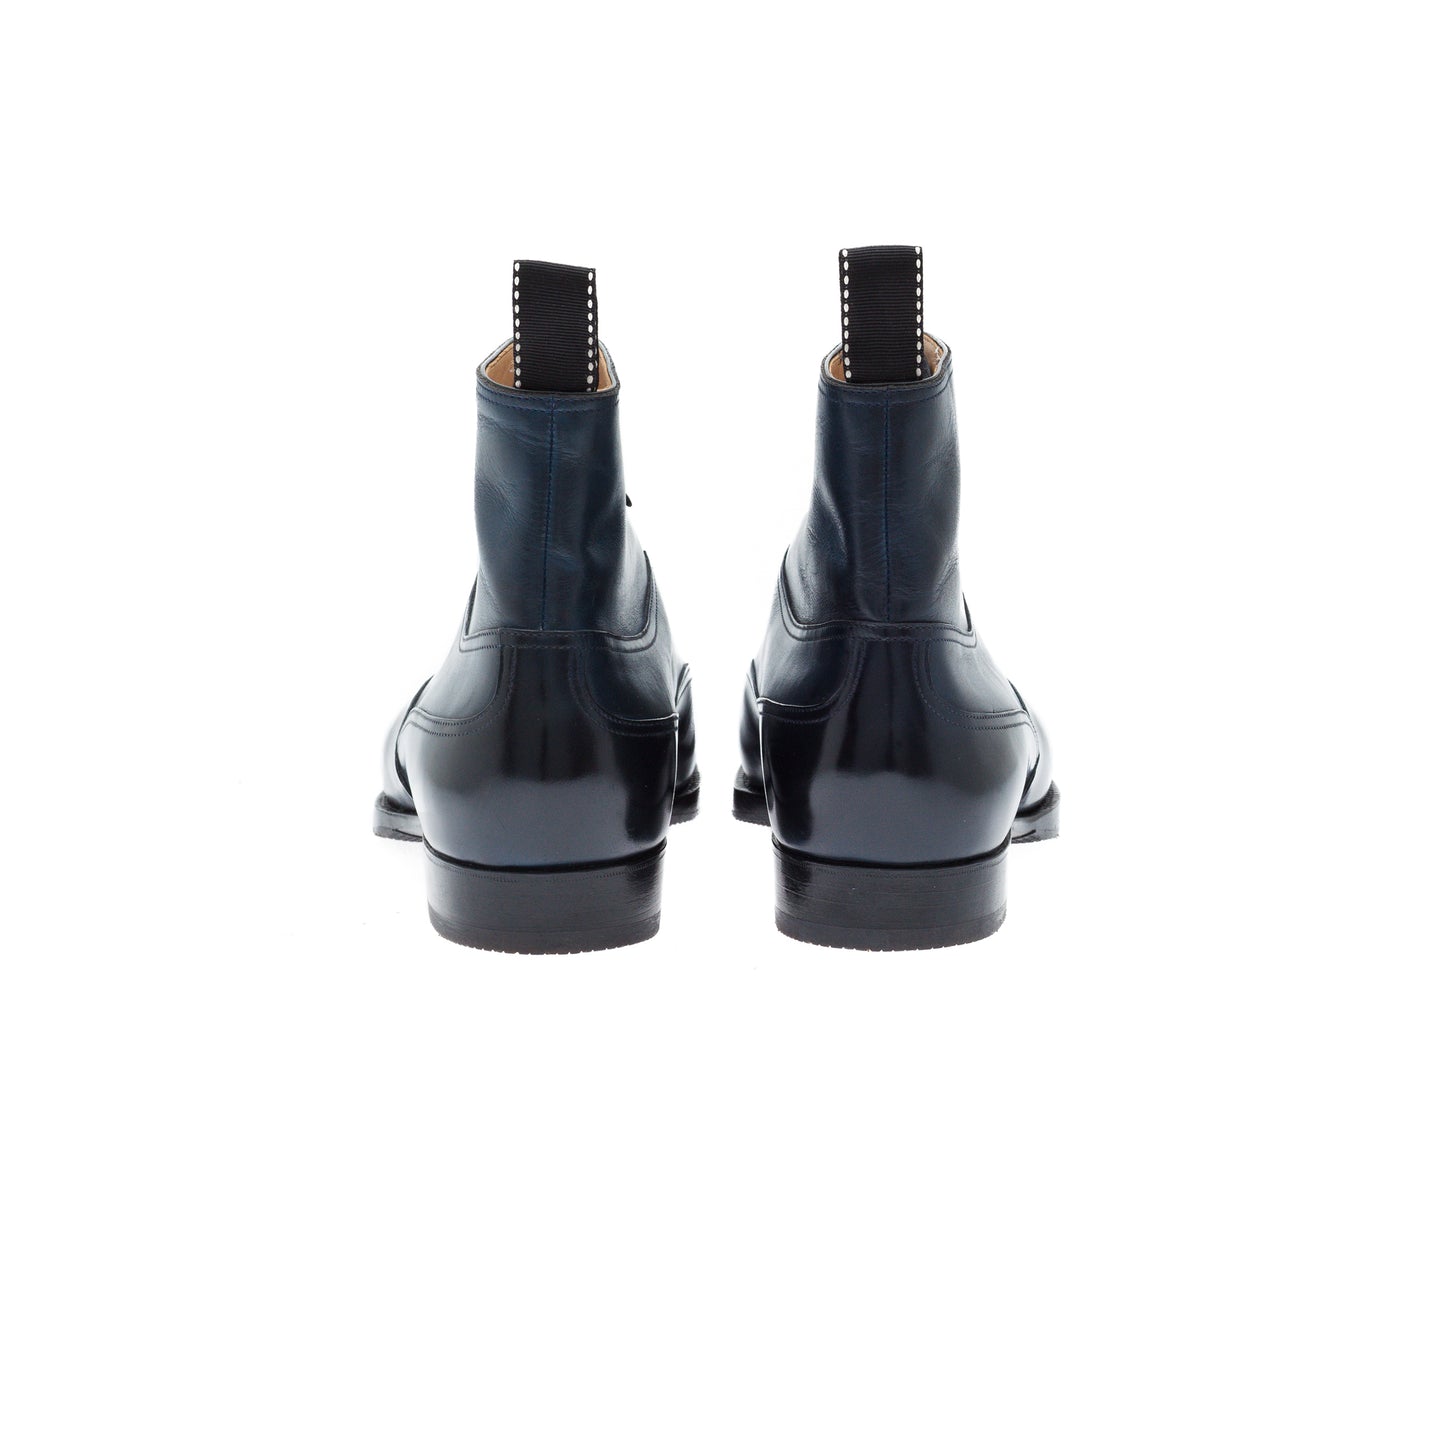 Elegant Oxford boots in dark blue Crust calf leather